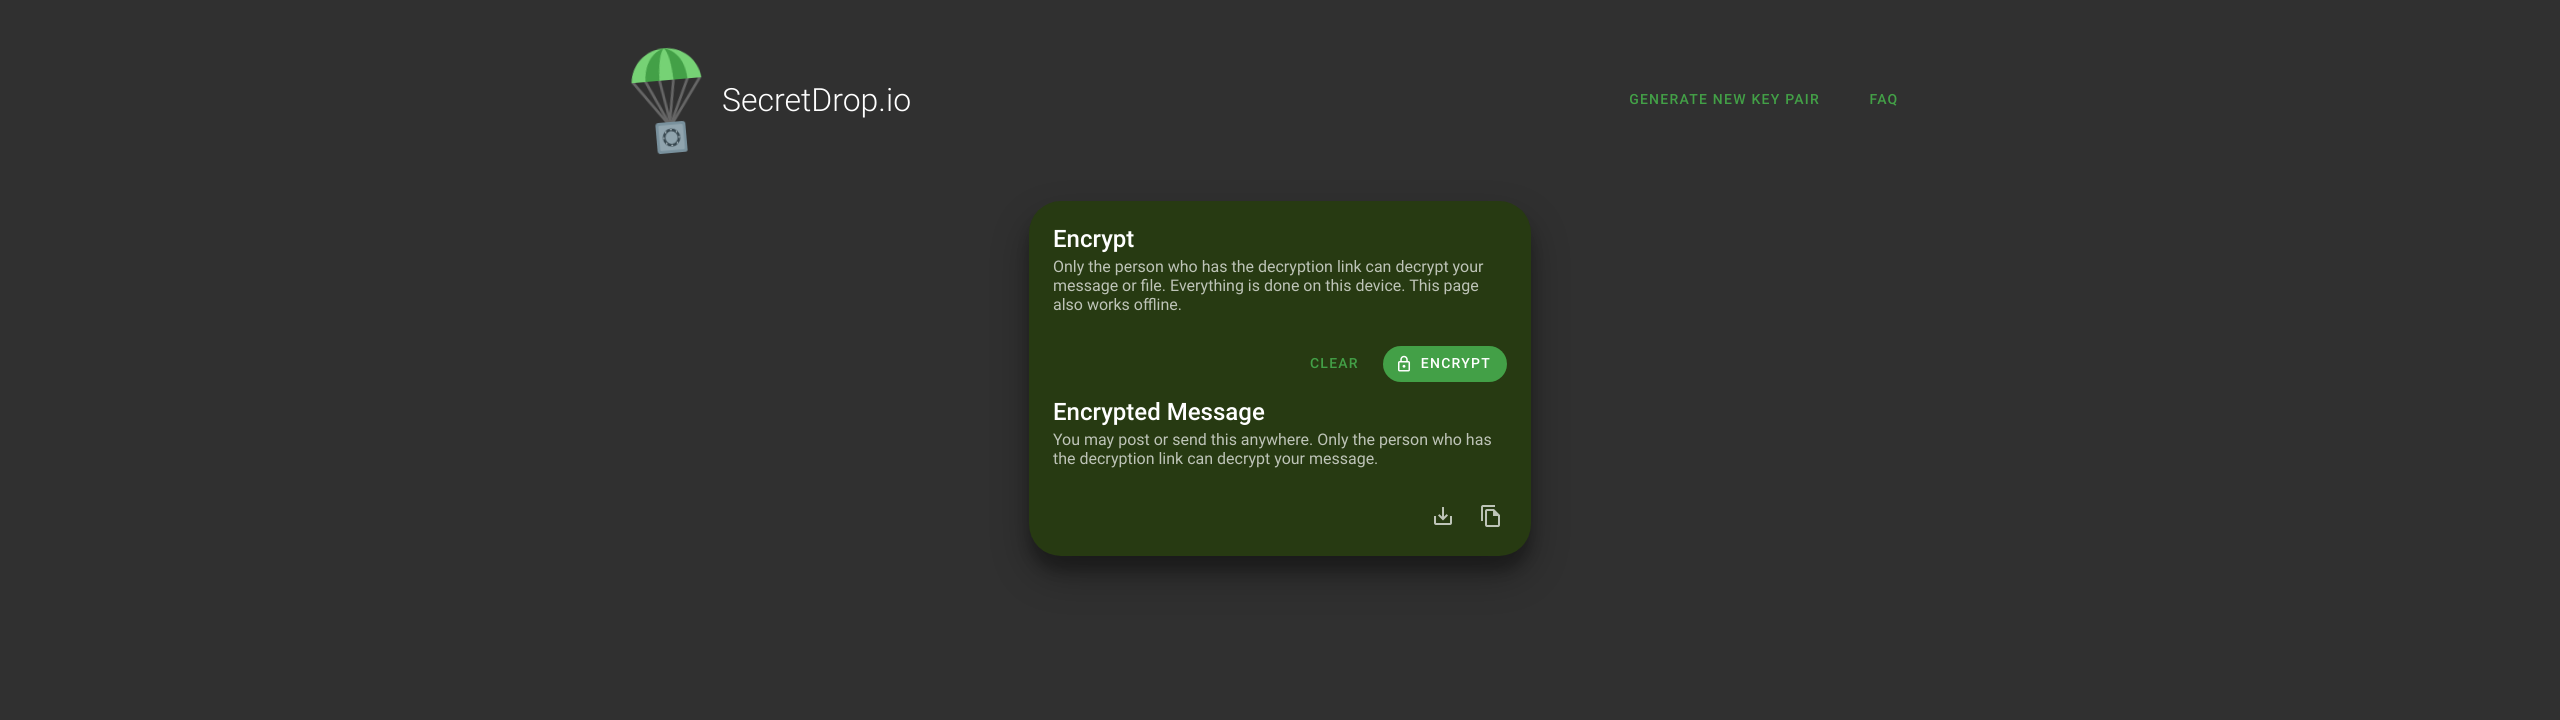 main-test-ts-encrypt-decrypt-encrypt-page-text-encryption-screenshot-2560-720-0-snap.png